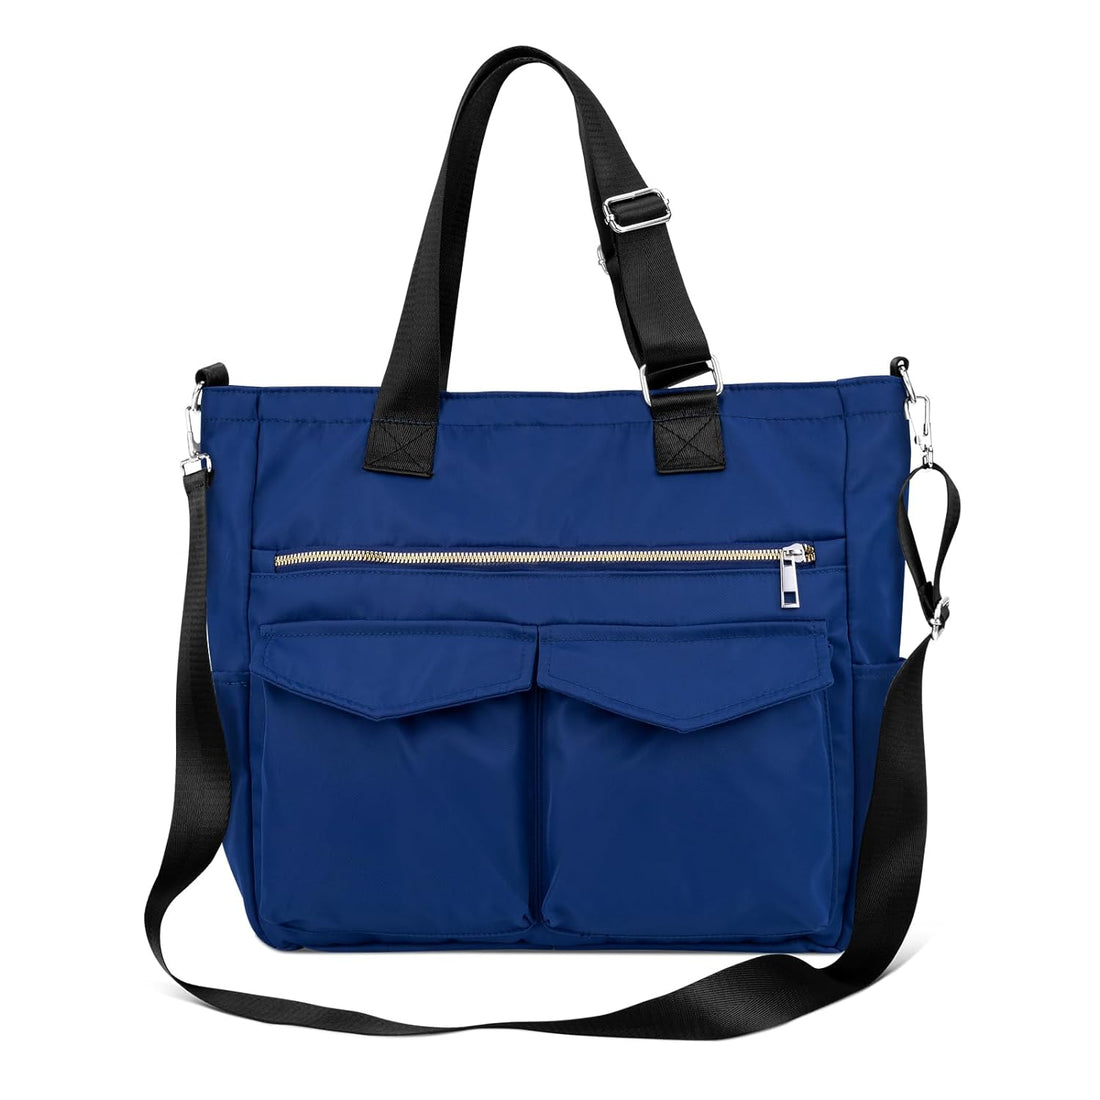 Iioscre Travel Tote Bag for Women, Waterproof Duffel Bag with Adjustable Strap, Crossbody Weekender Bag with Trolley Sleeve, Blue, Travel Tote Bag